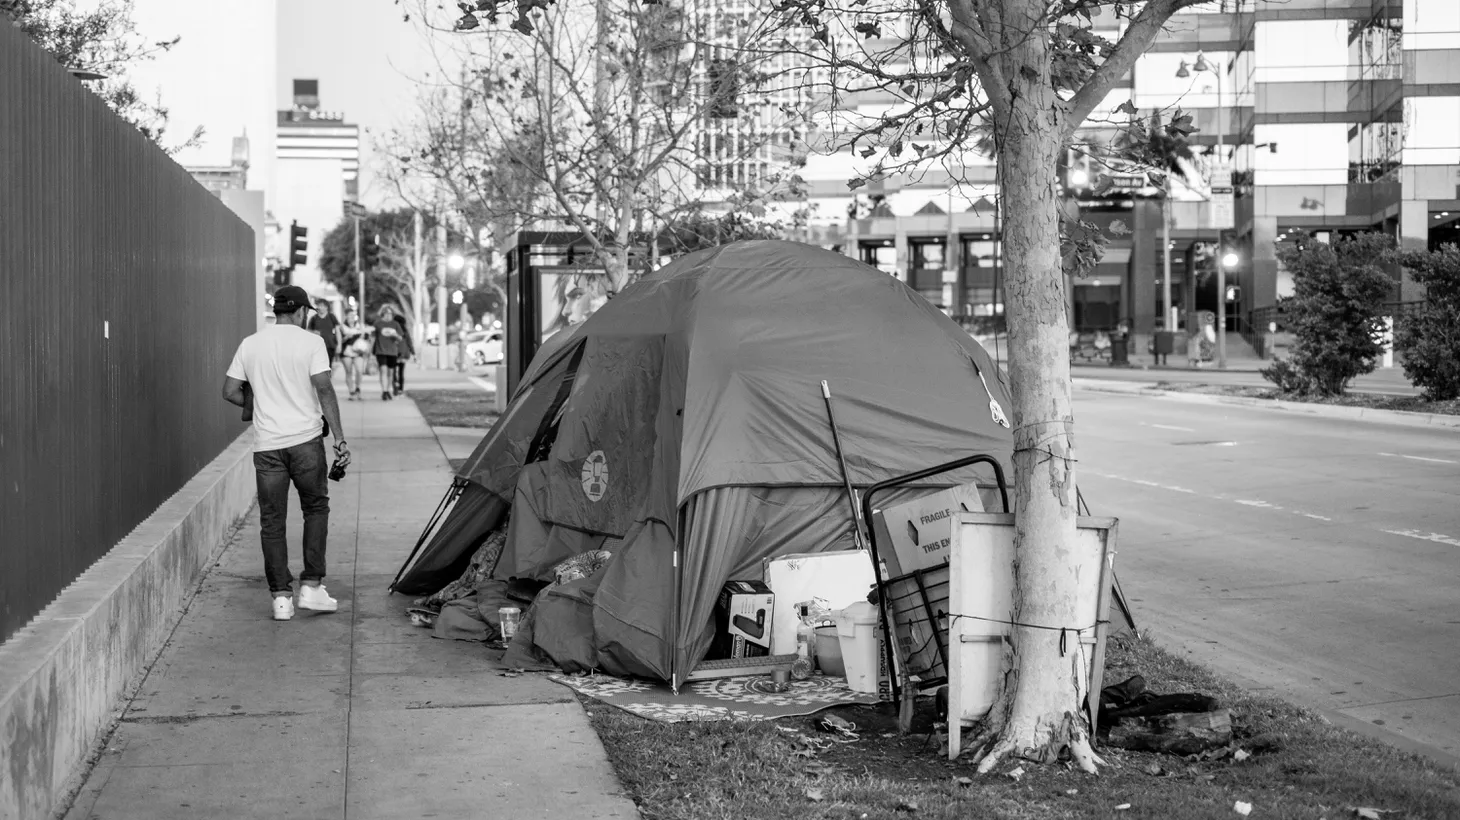 A homeless encampment sits on a sidewalk in Mid City, California.